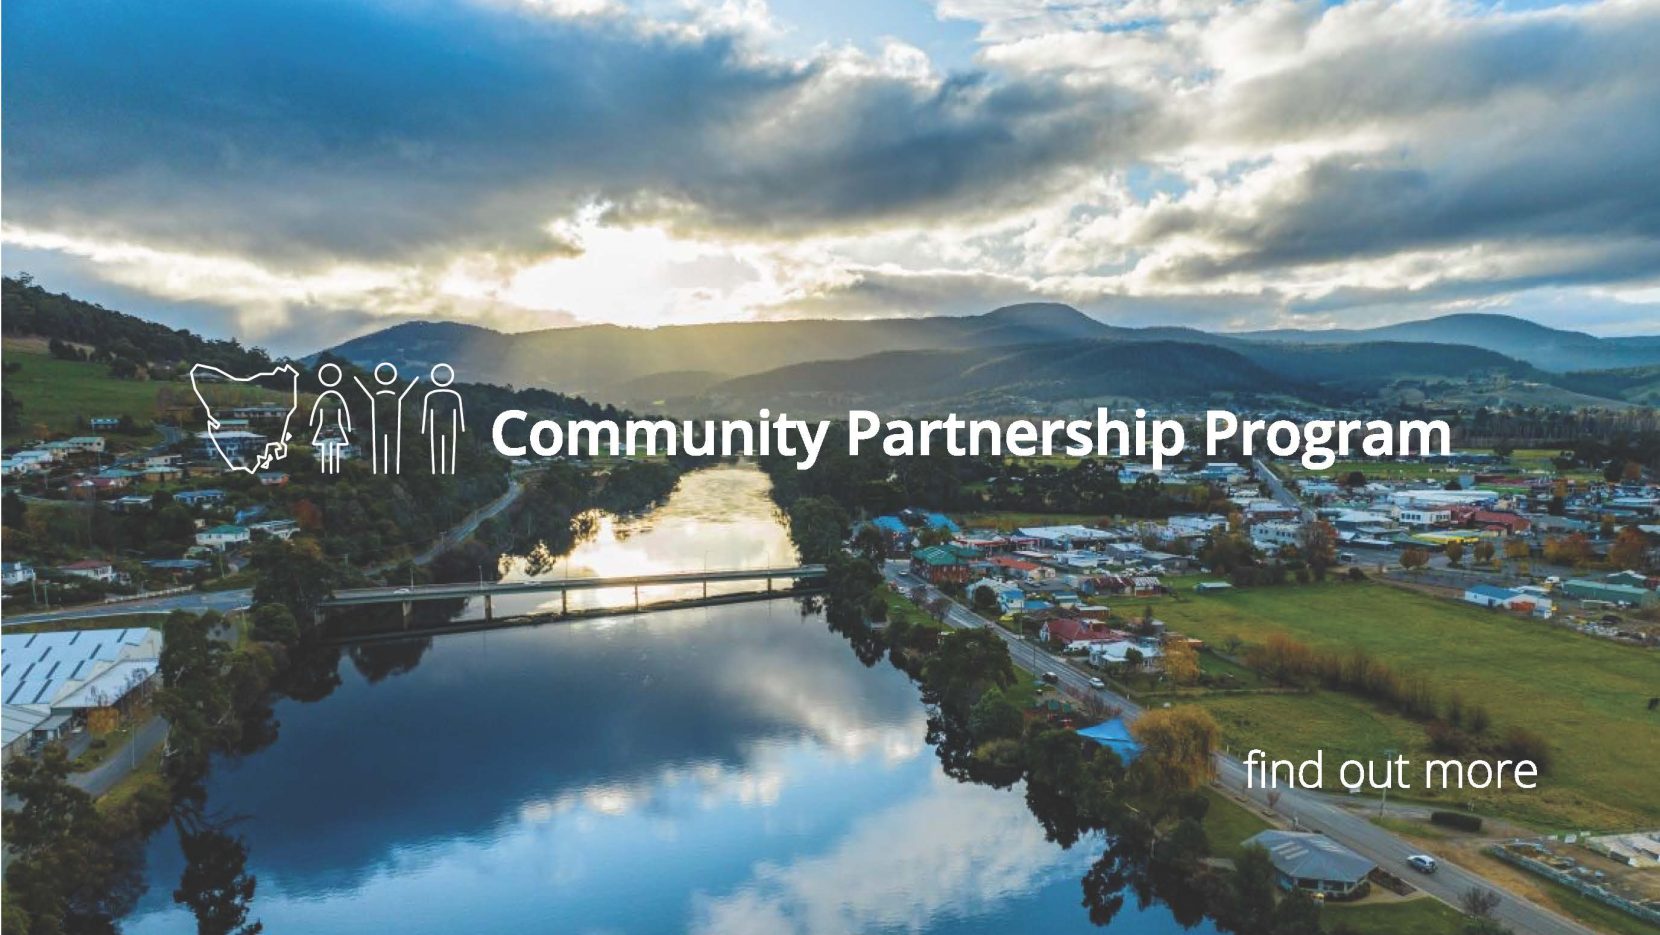 Community Partnership Program